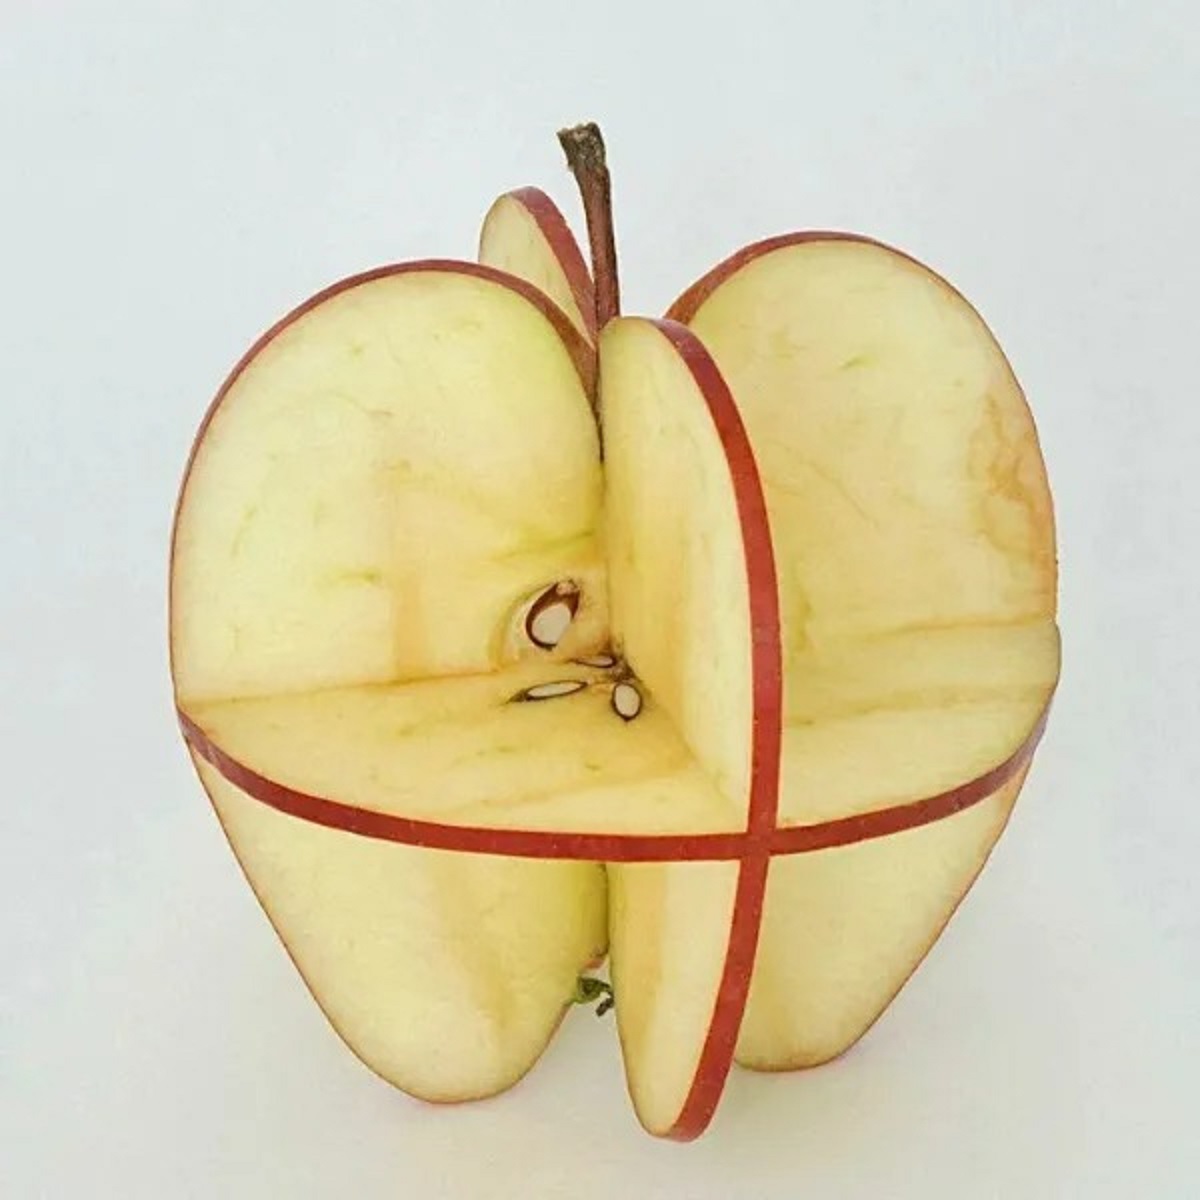 apples in art